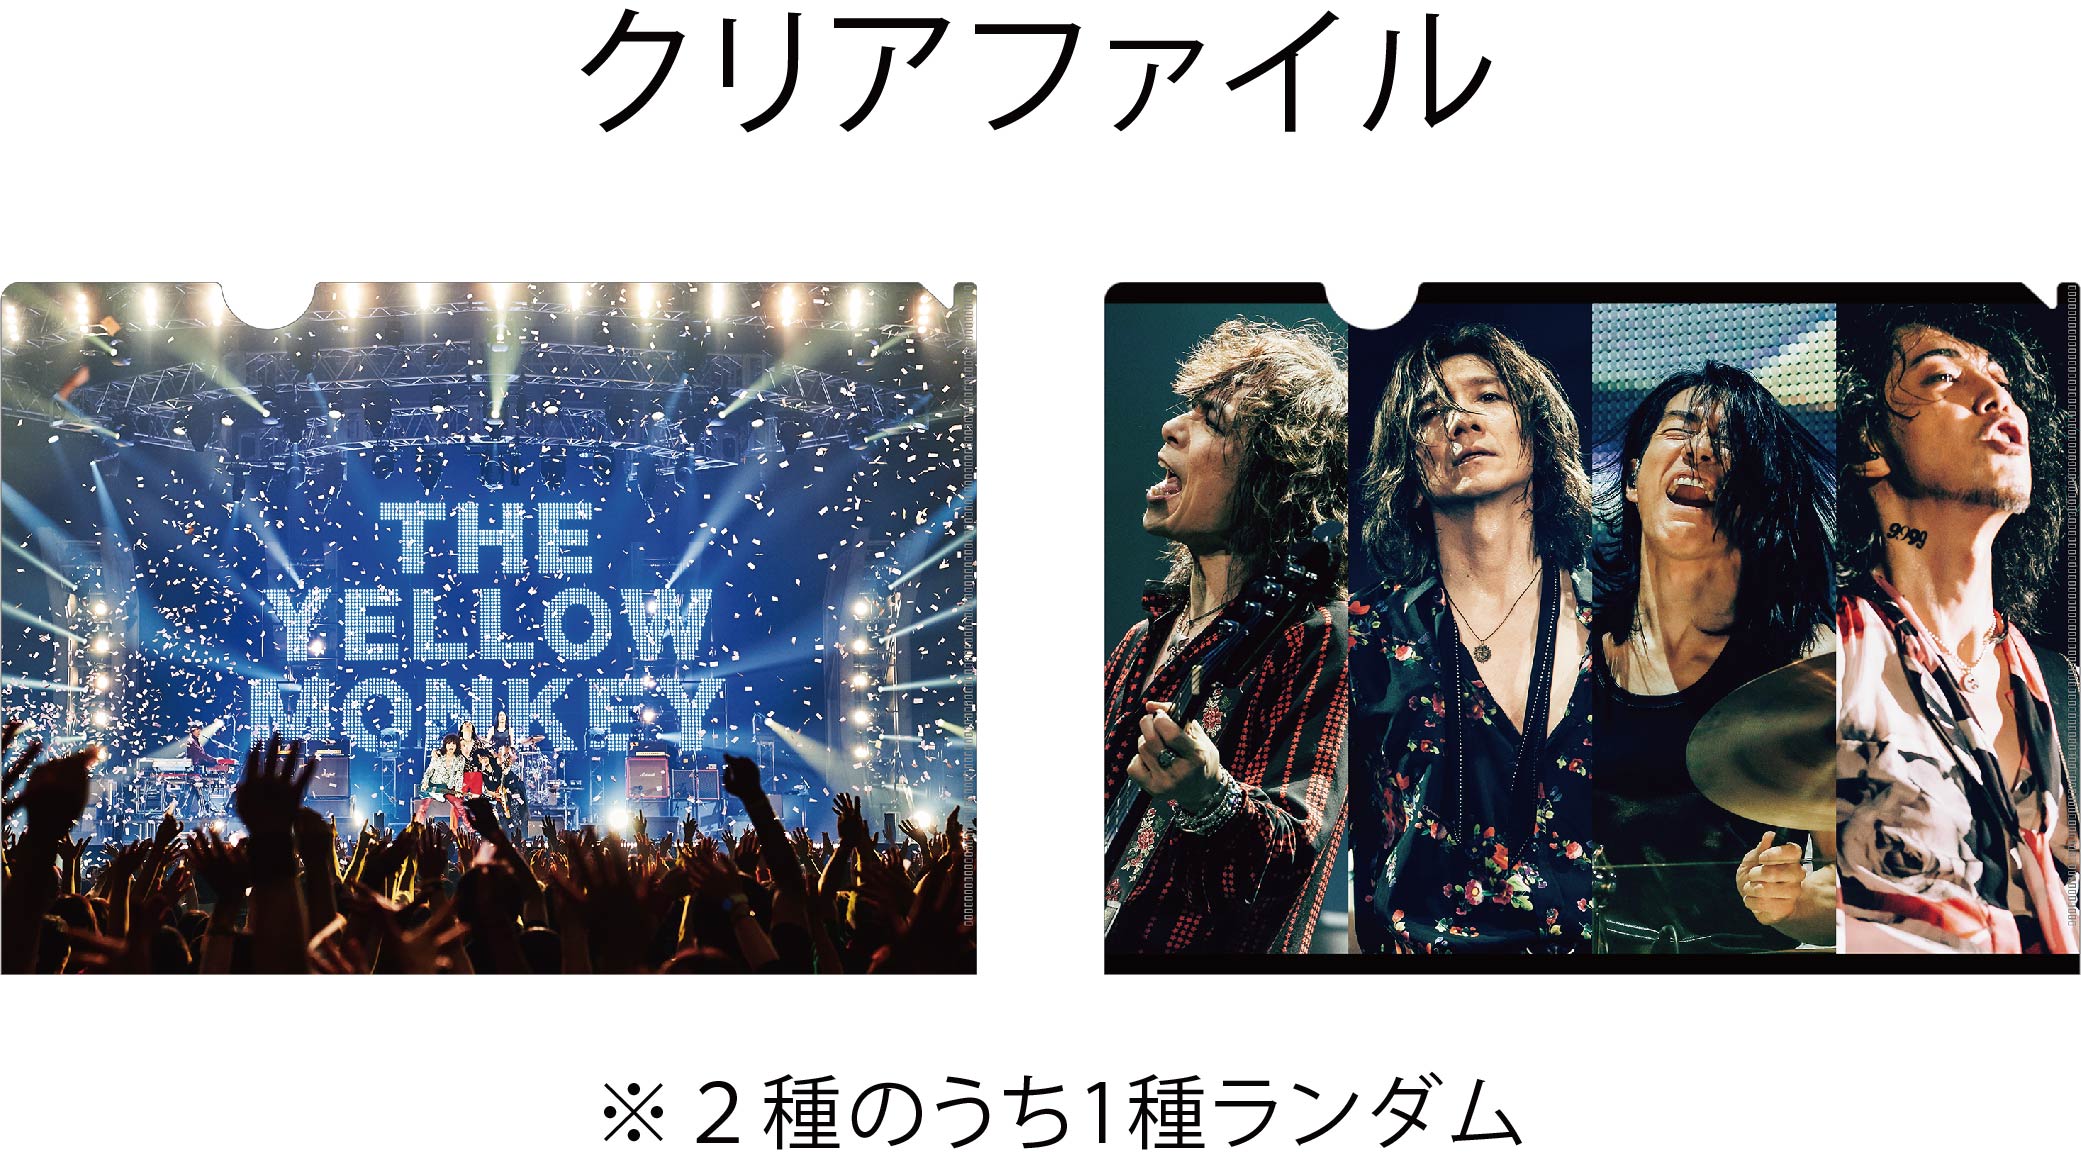 THE YELLOW MONKEY　TOUR 2019　Blu-ray BOX